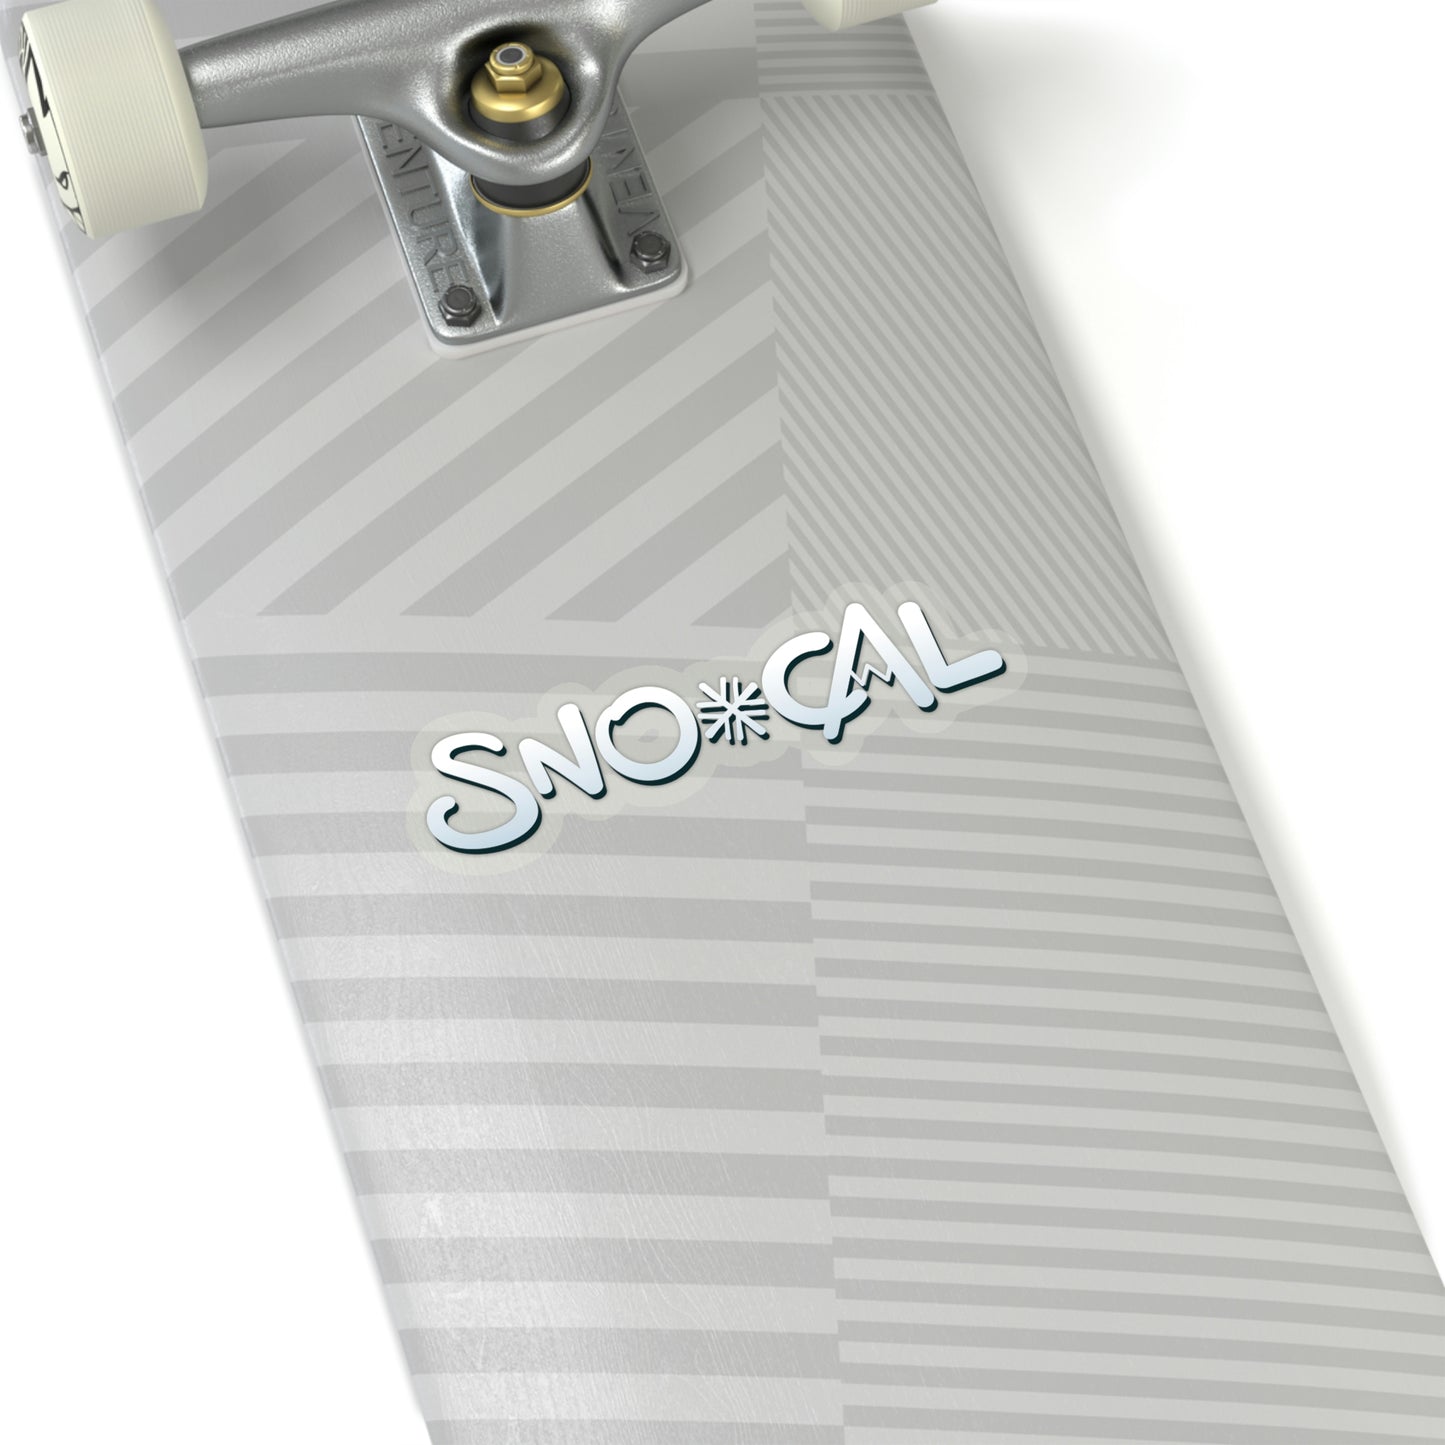 Sno Cal™ Logo Kiss-Cut Stickers - Sno Cal